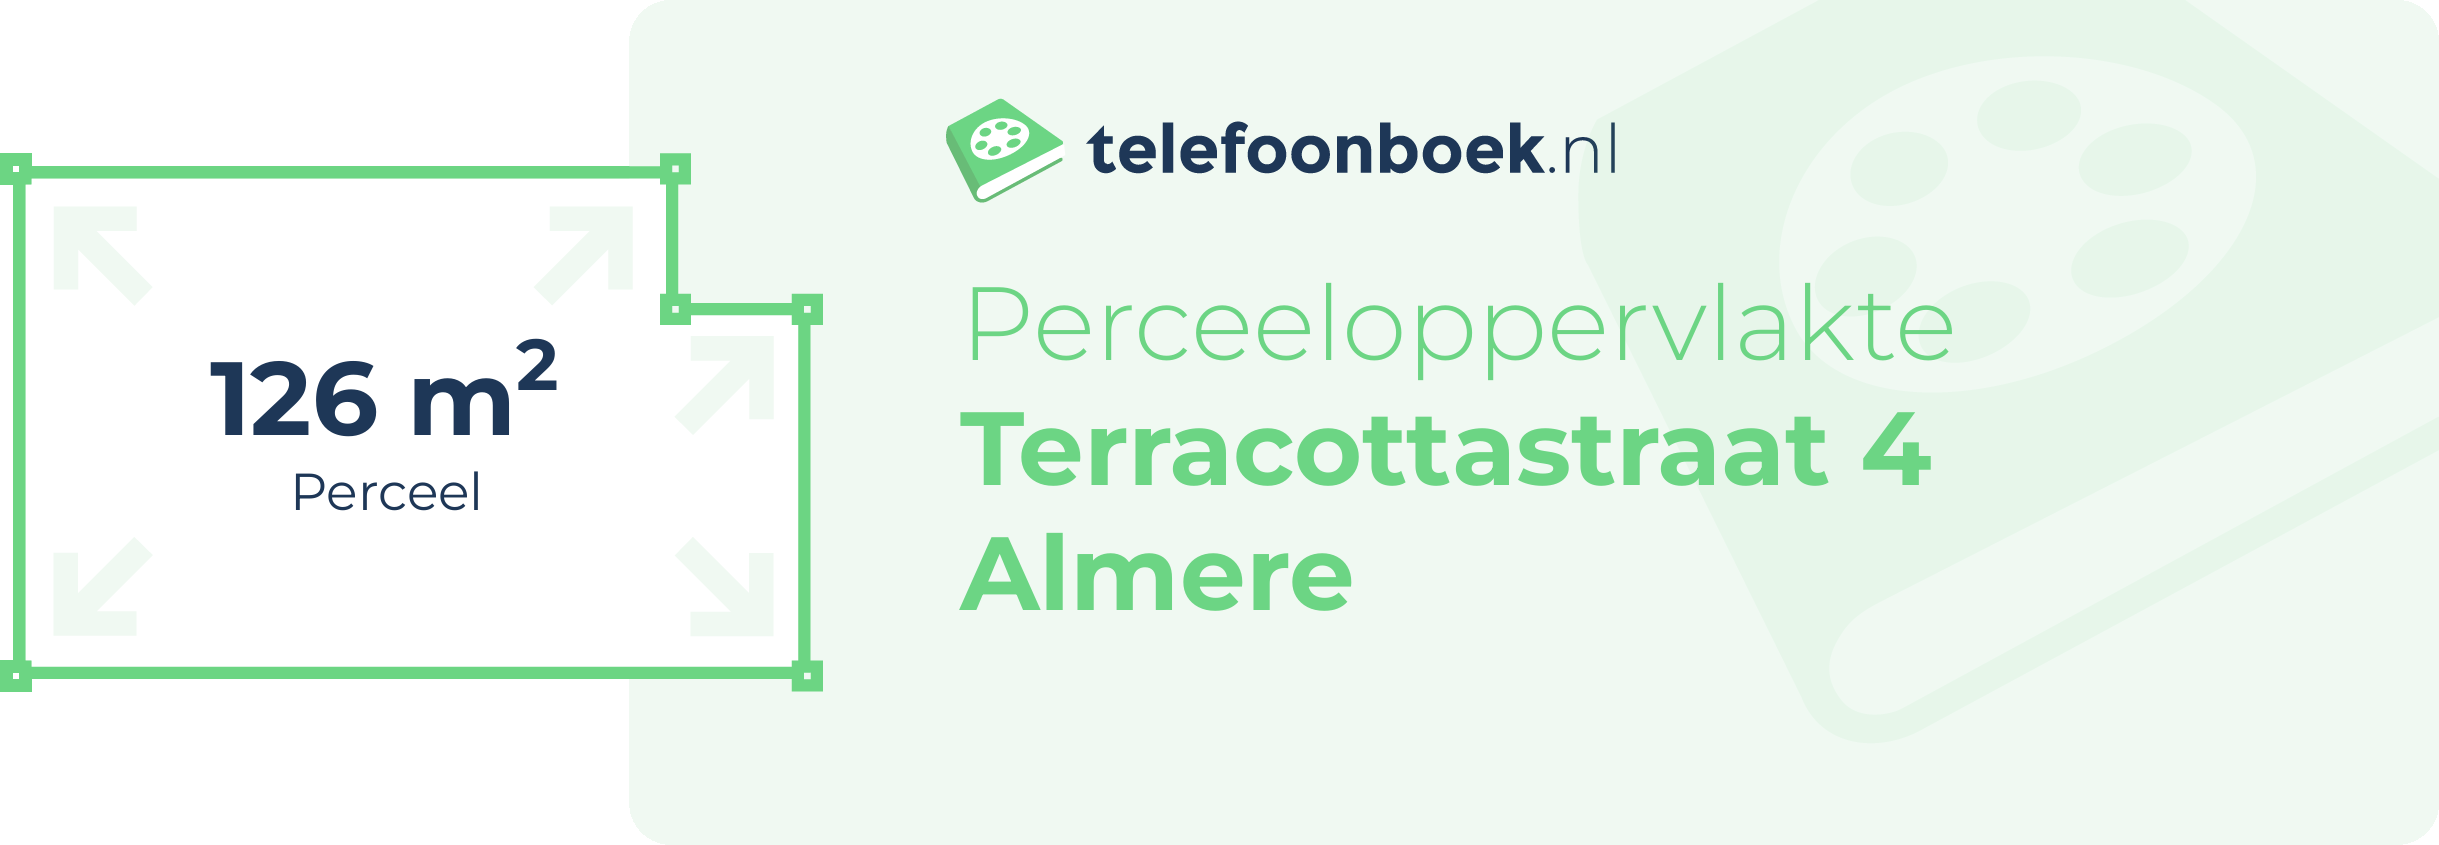 Perceeloppervlakte Terracottastraat 4 Almere